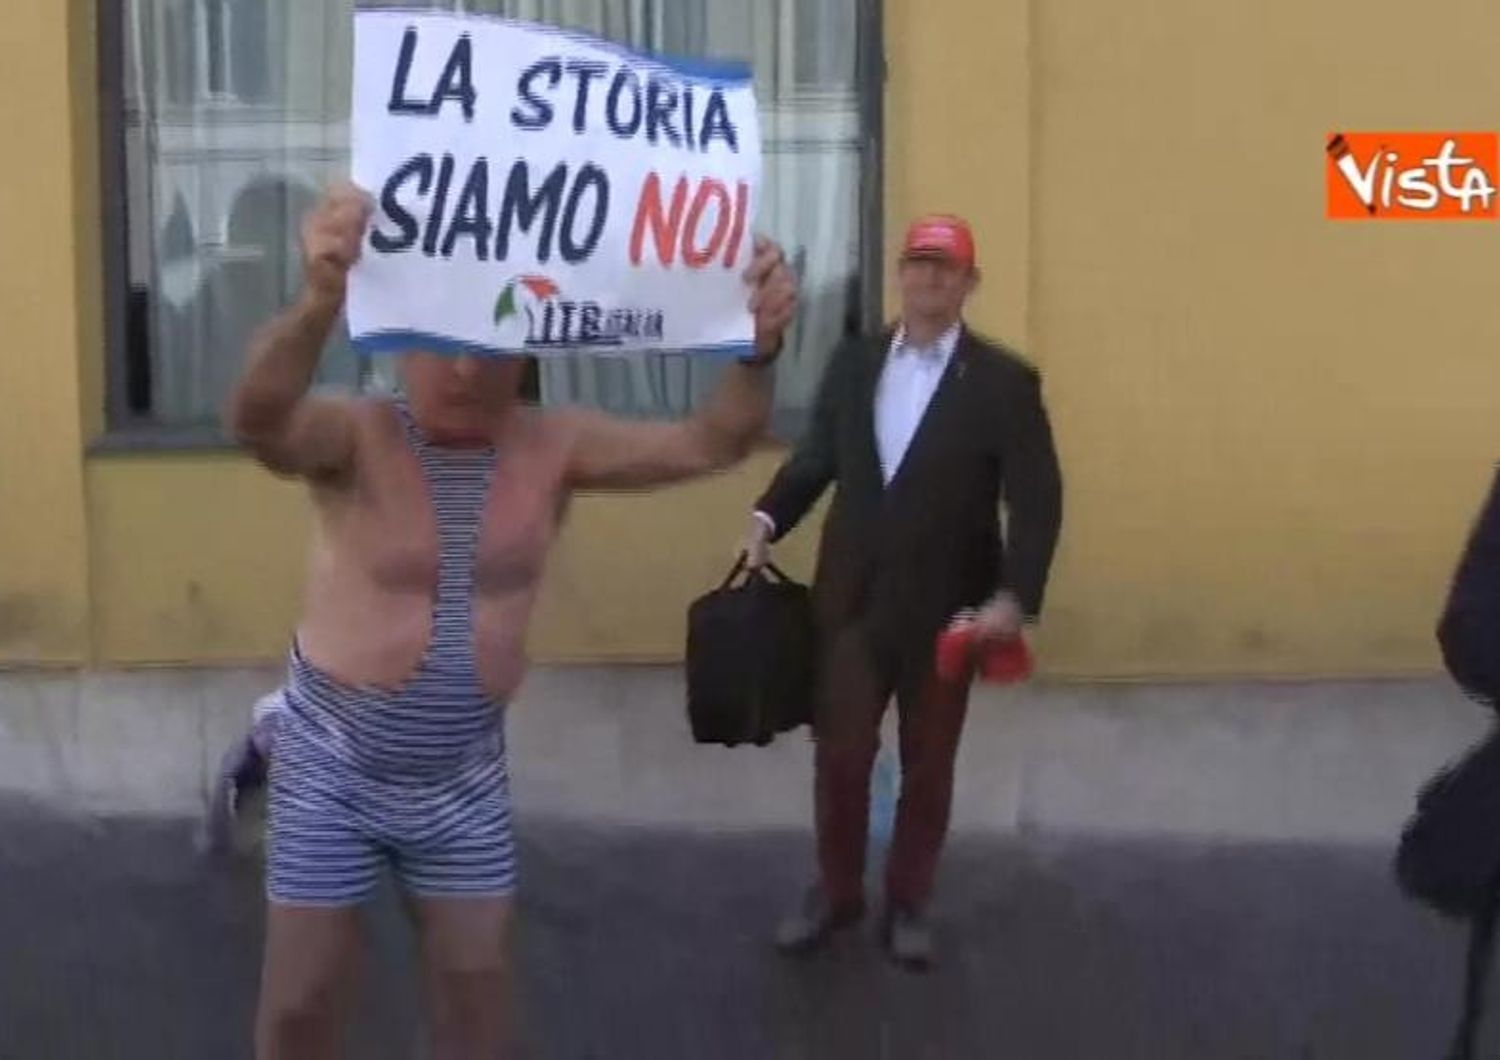 &nbsp;Protesta anti- Bolkestein dei balneari, bagnino in costume davanti Montecitorio